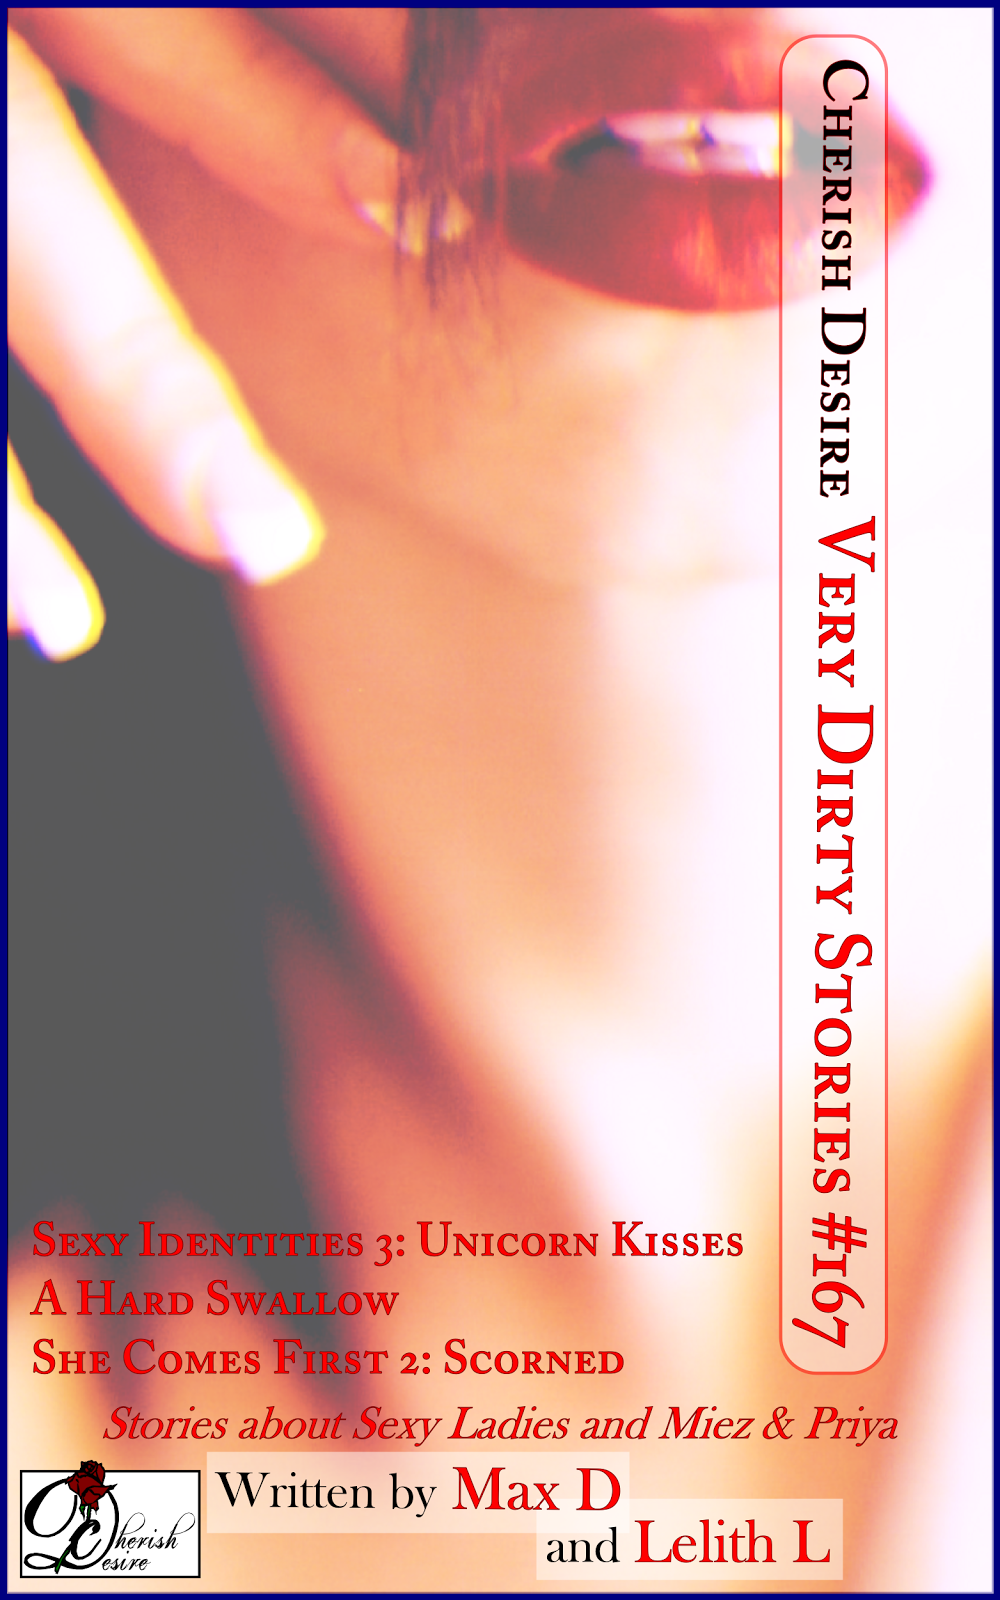 Cherish Desire: Very Dirty Stories #167, Max D, Lelith L, erotica